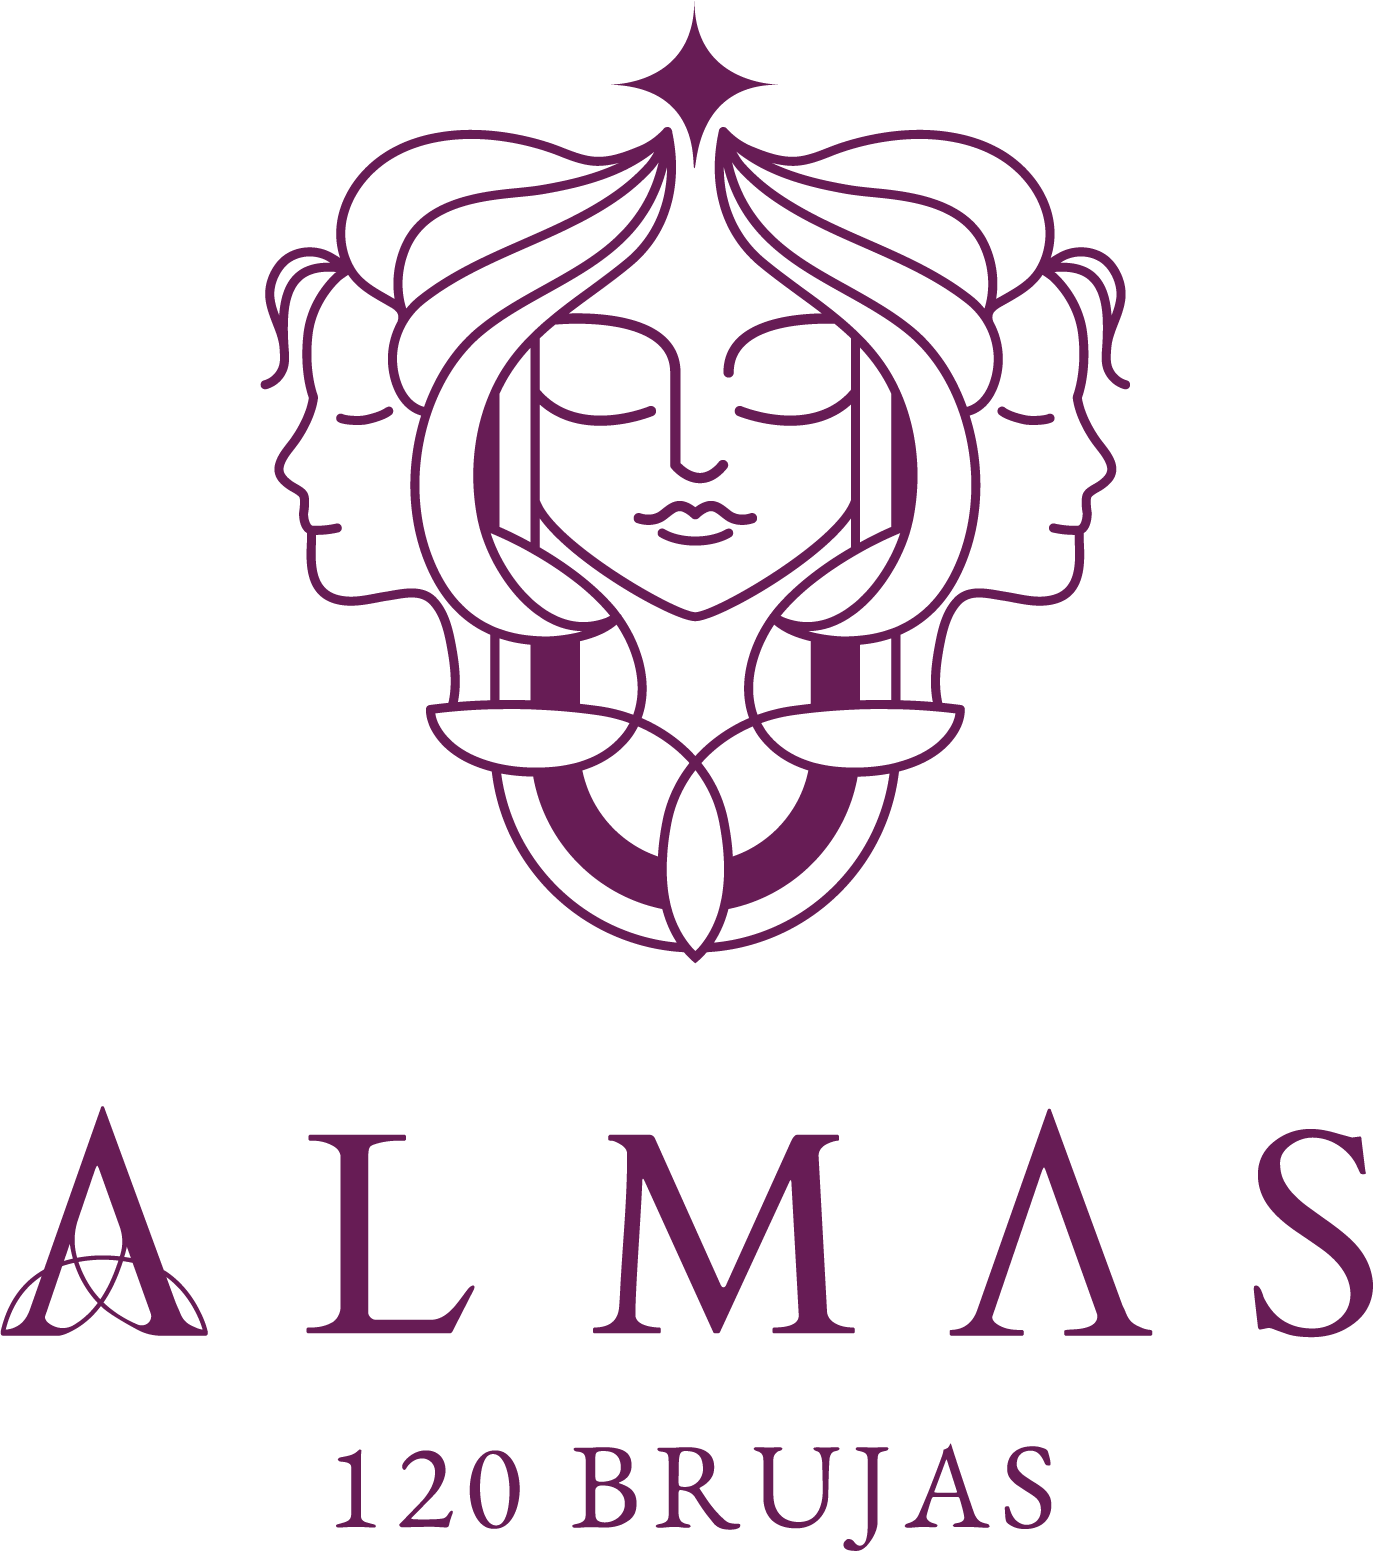 Almas_120_brujas_logo_completo